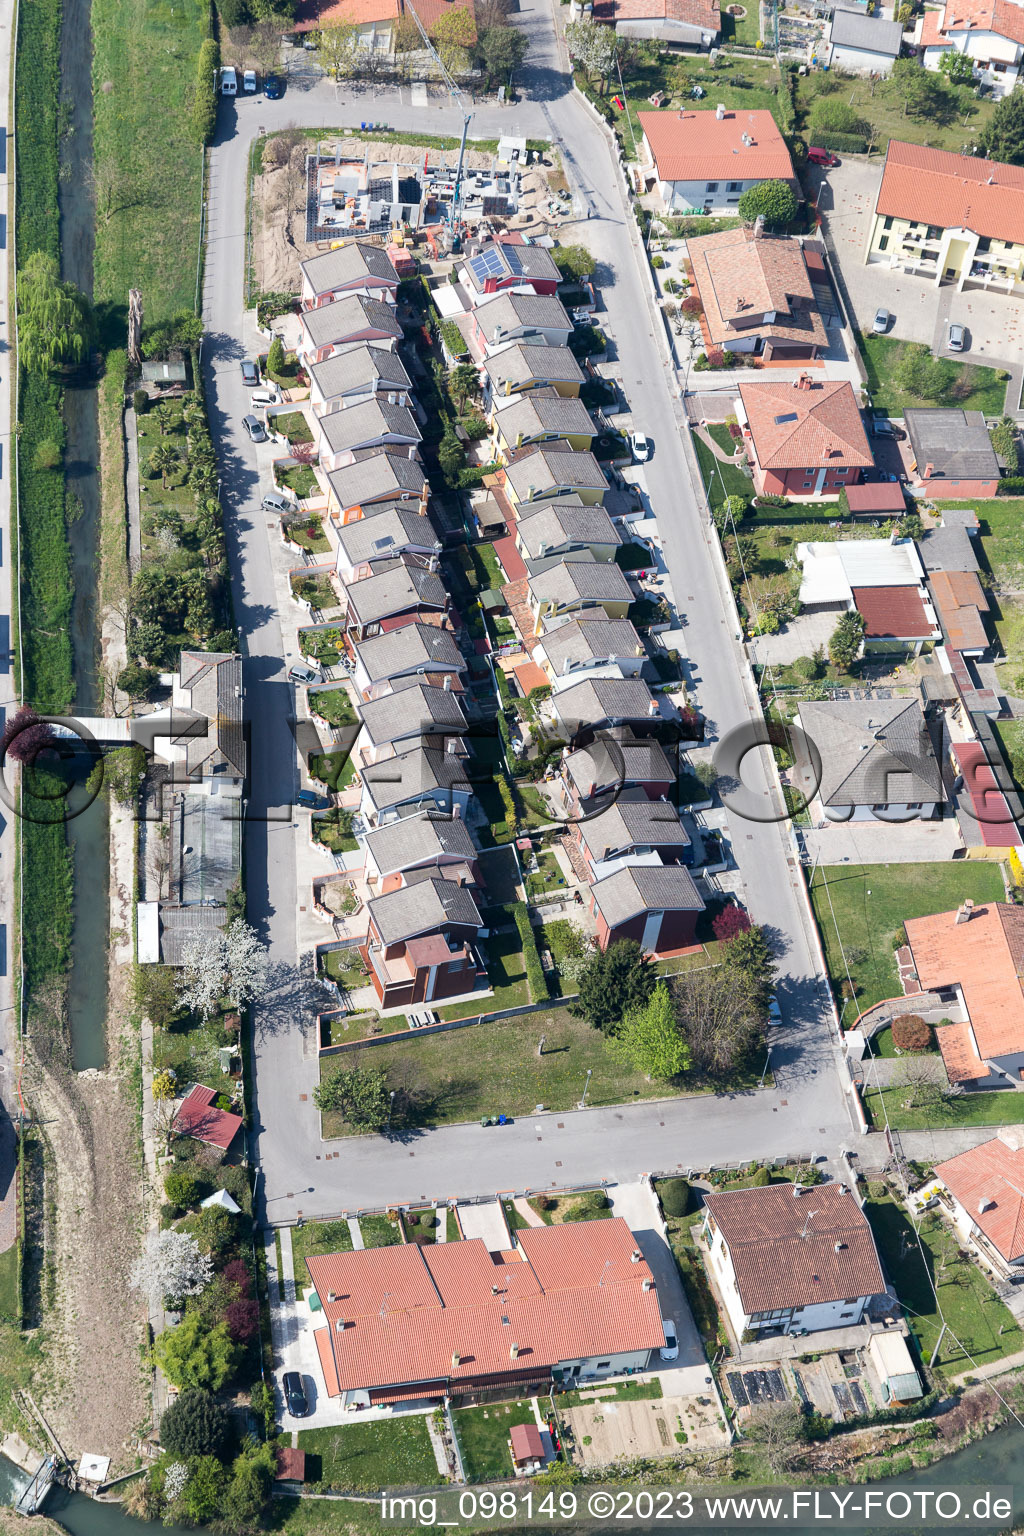 Aerial photograpy of Fossalta di Portogruaro in the state Veneto, Italy